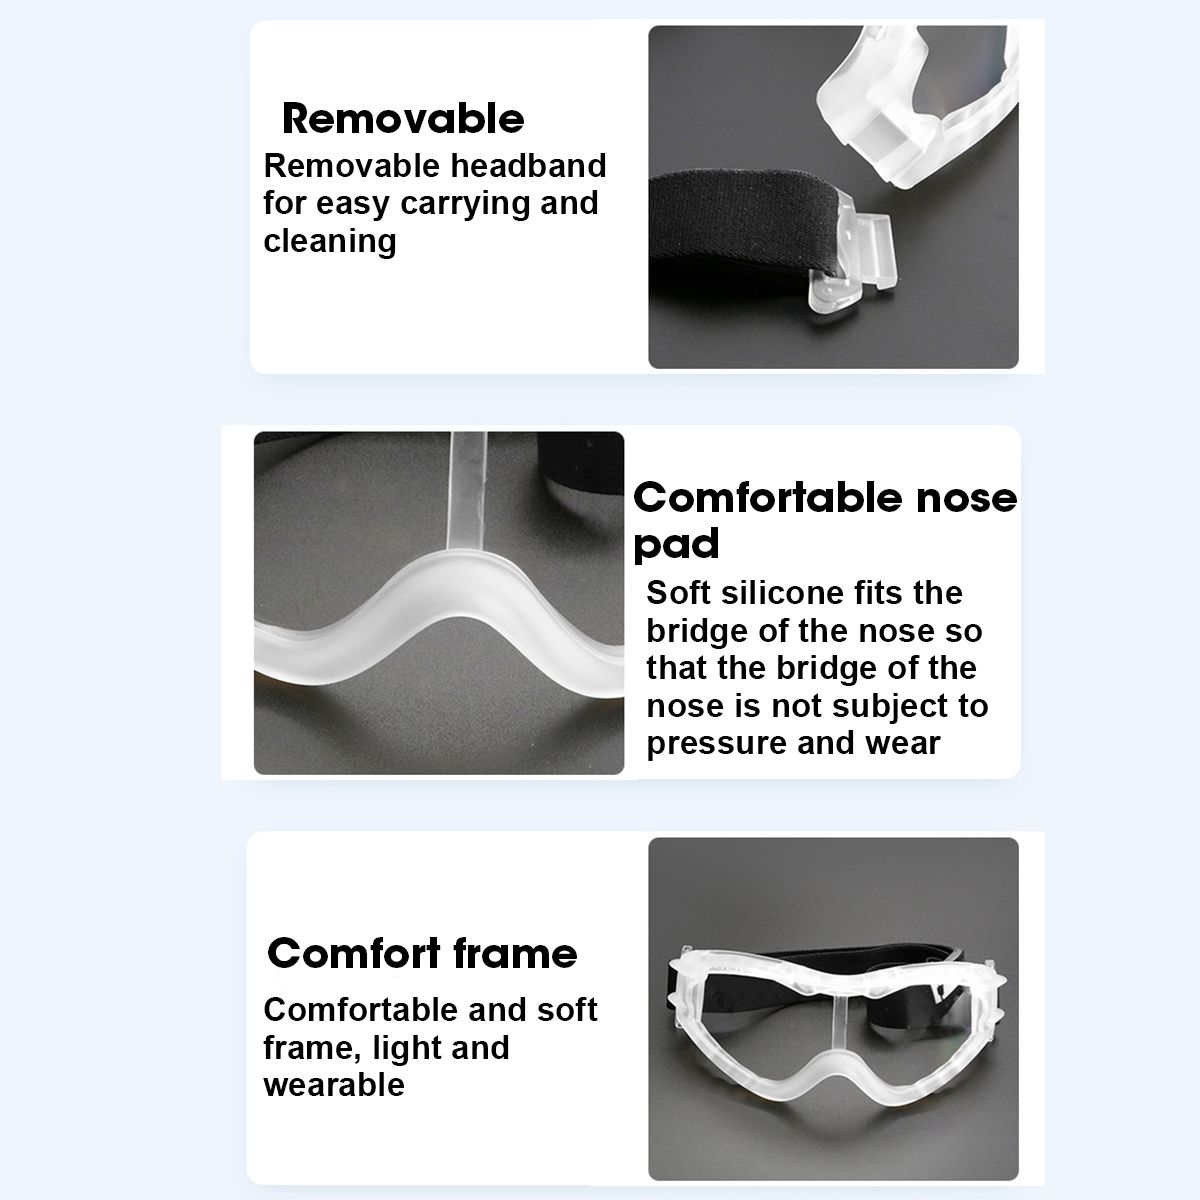 Anti-fog-Transparent-Protective-Eye-Shield-Goggle-Anti-spitting-Splash-Anti-Dust-Goggles-1664644